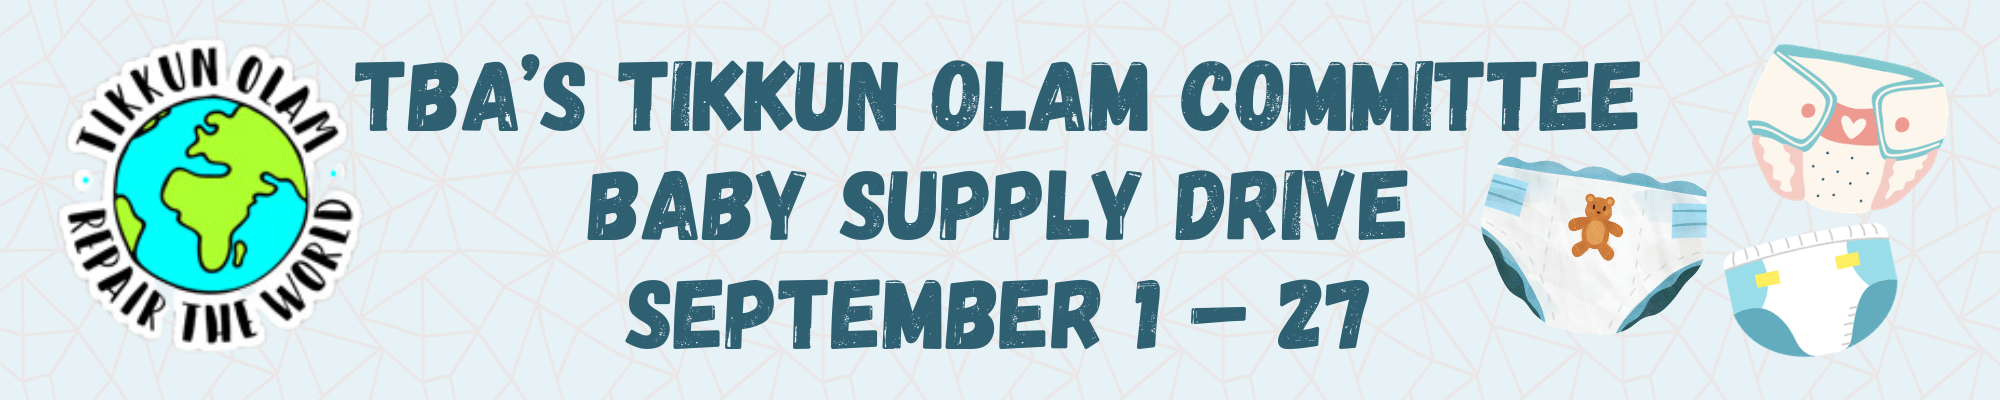 TBA’s Tikkun Olam Committee Baby Supply Drive September 1 – 27 (1)